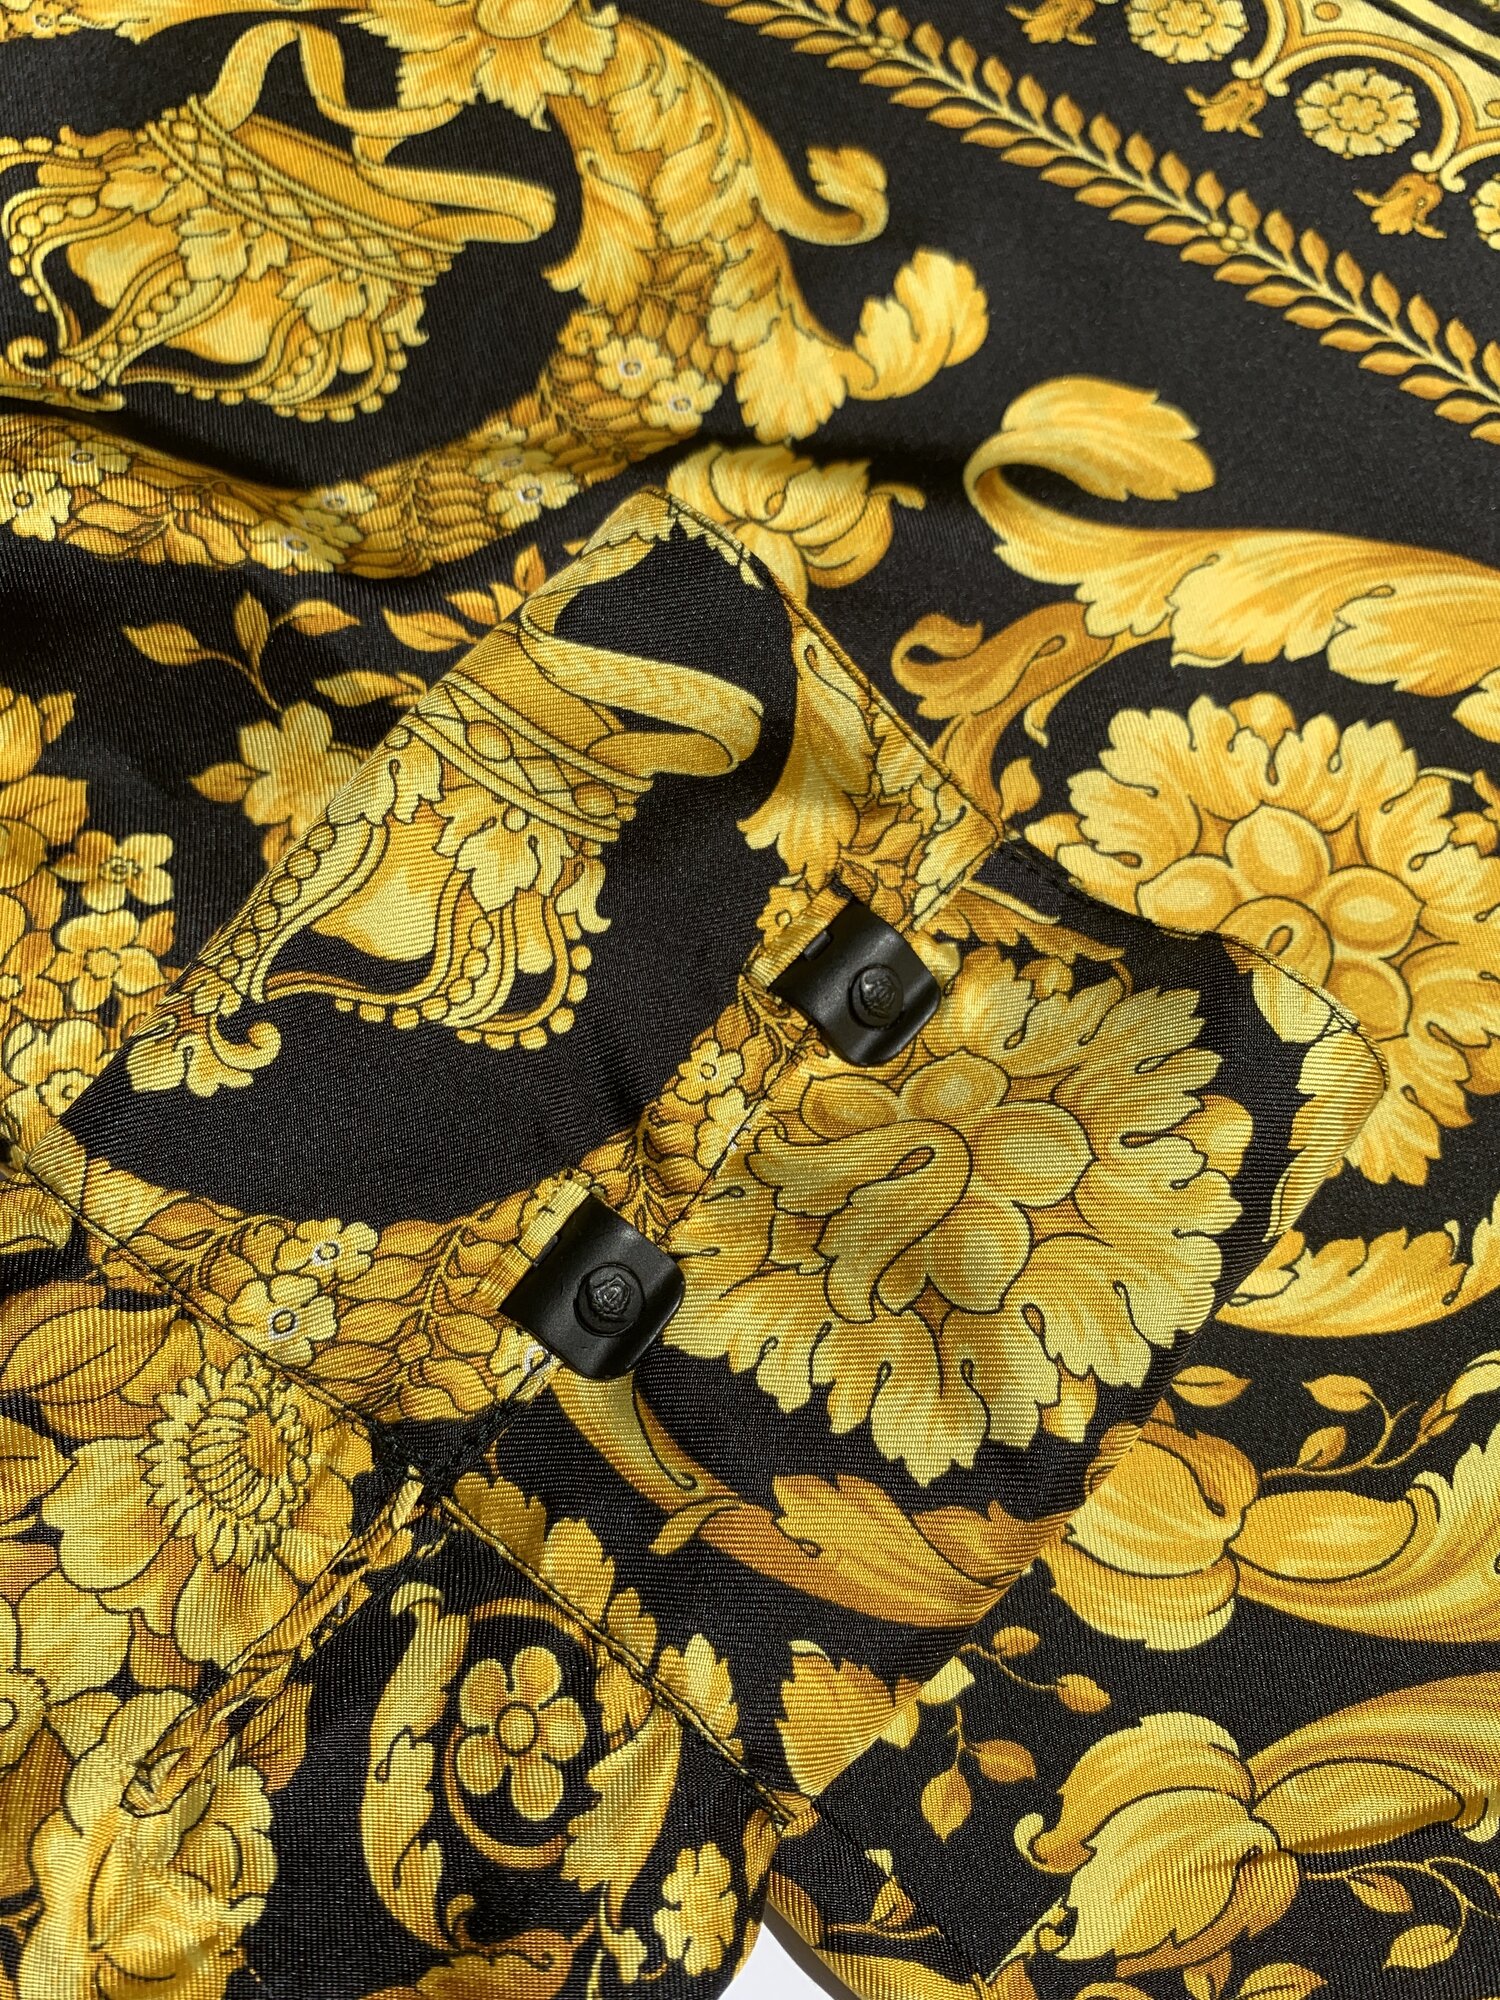 GIANNI VERSACE F/W '91 Barocco Collection Gold + Black Silk Blouse —  Garment